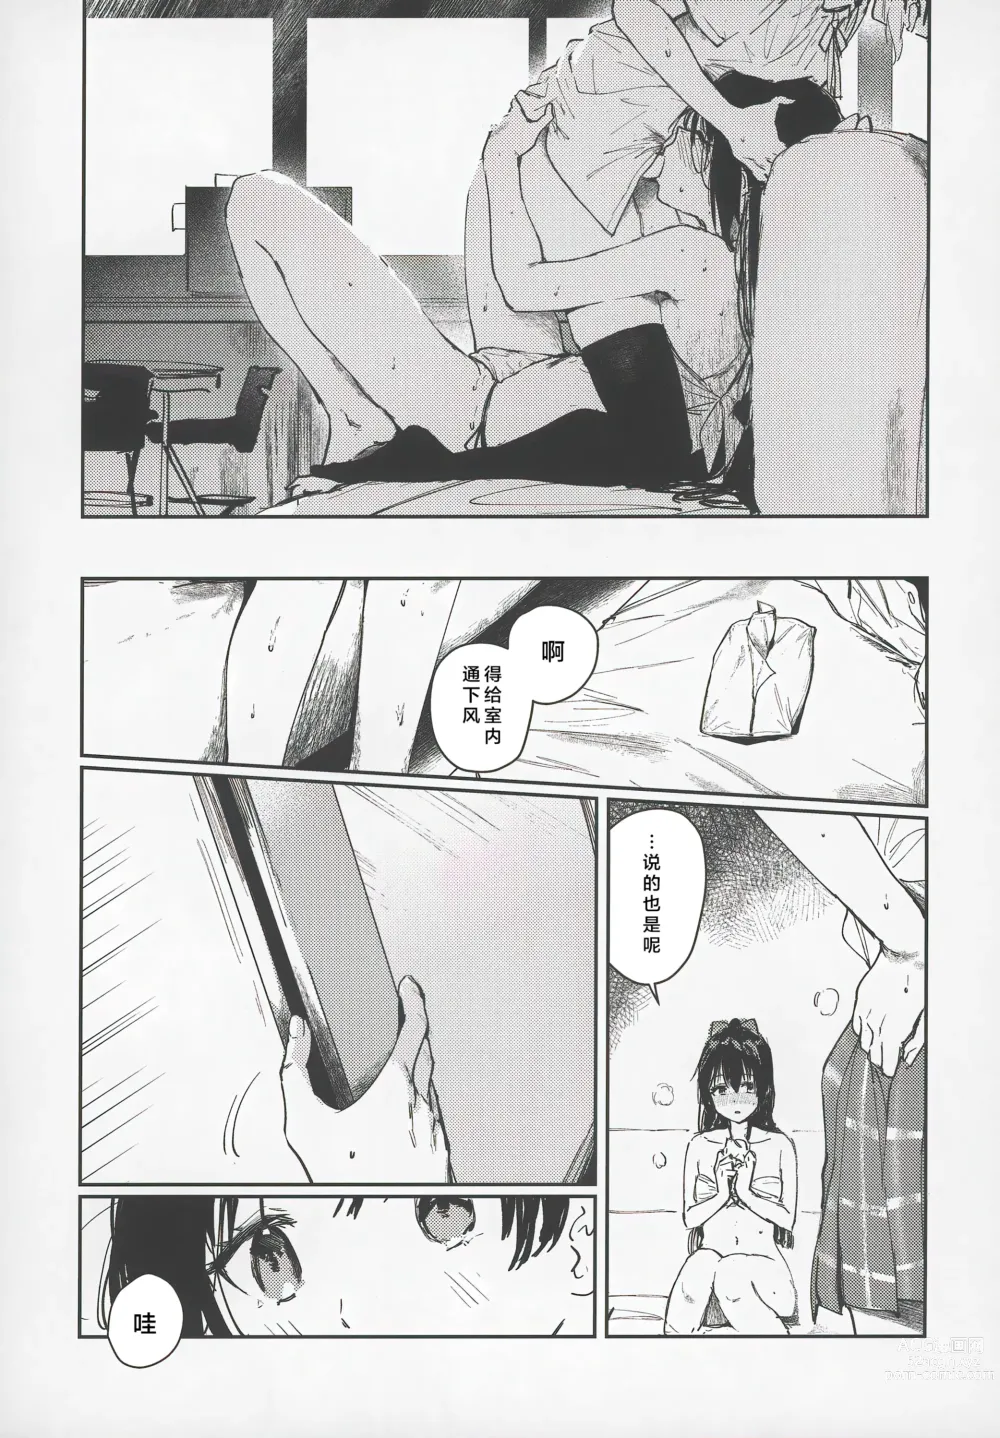 Page 24 of doujinshi 忆褪余青